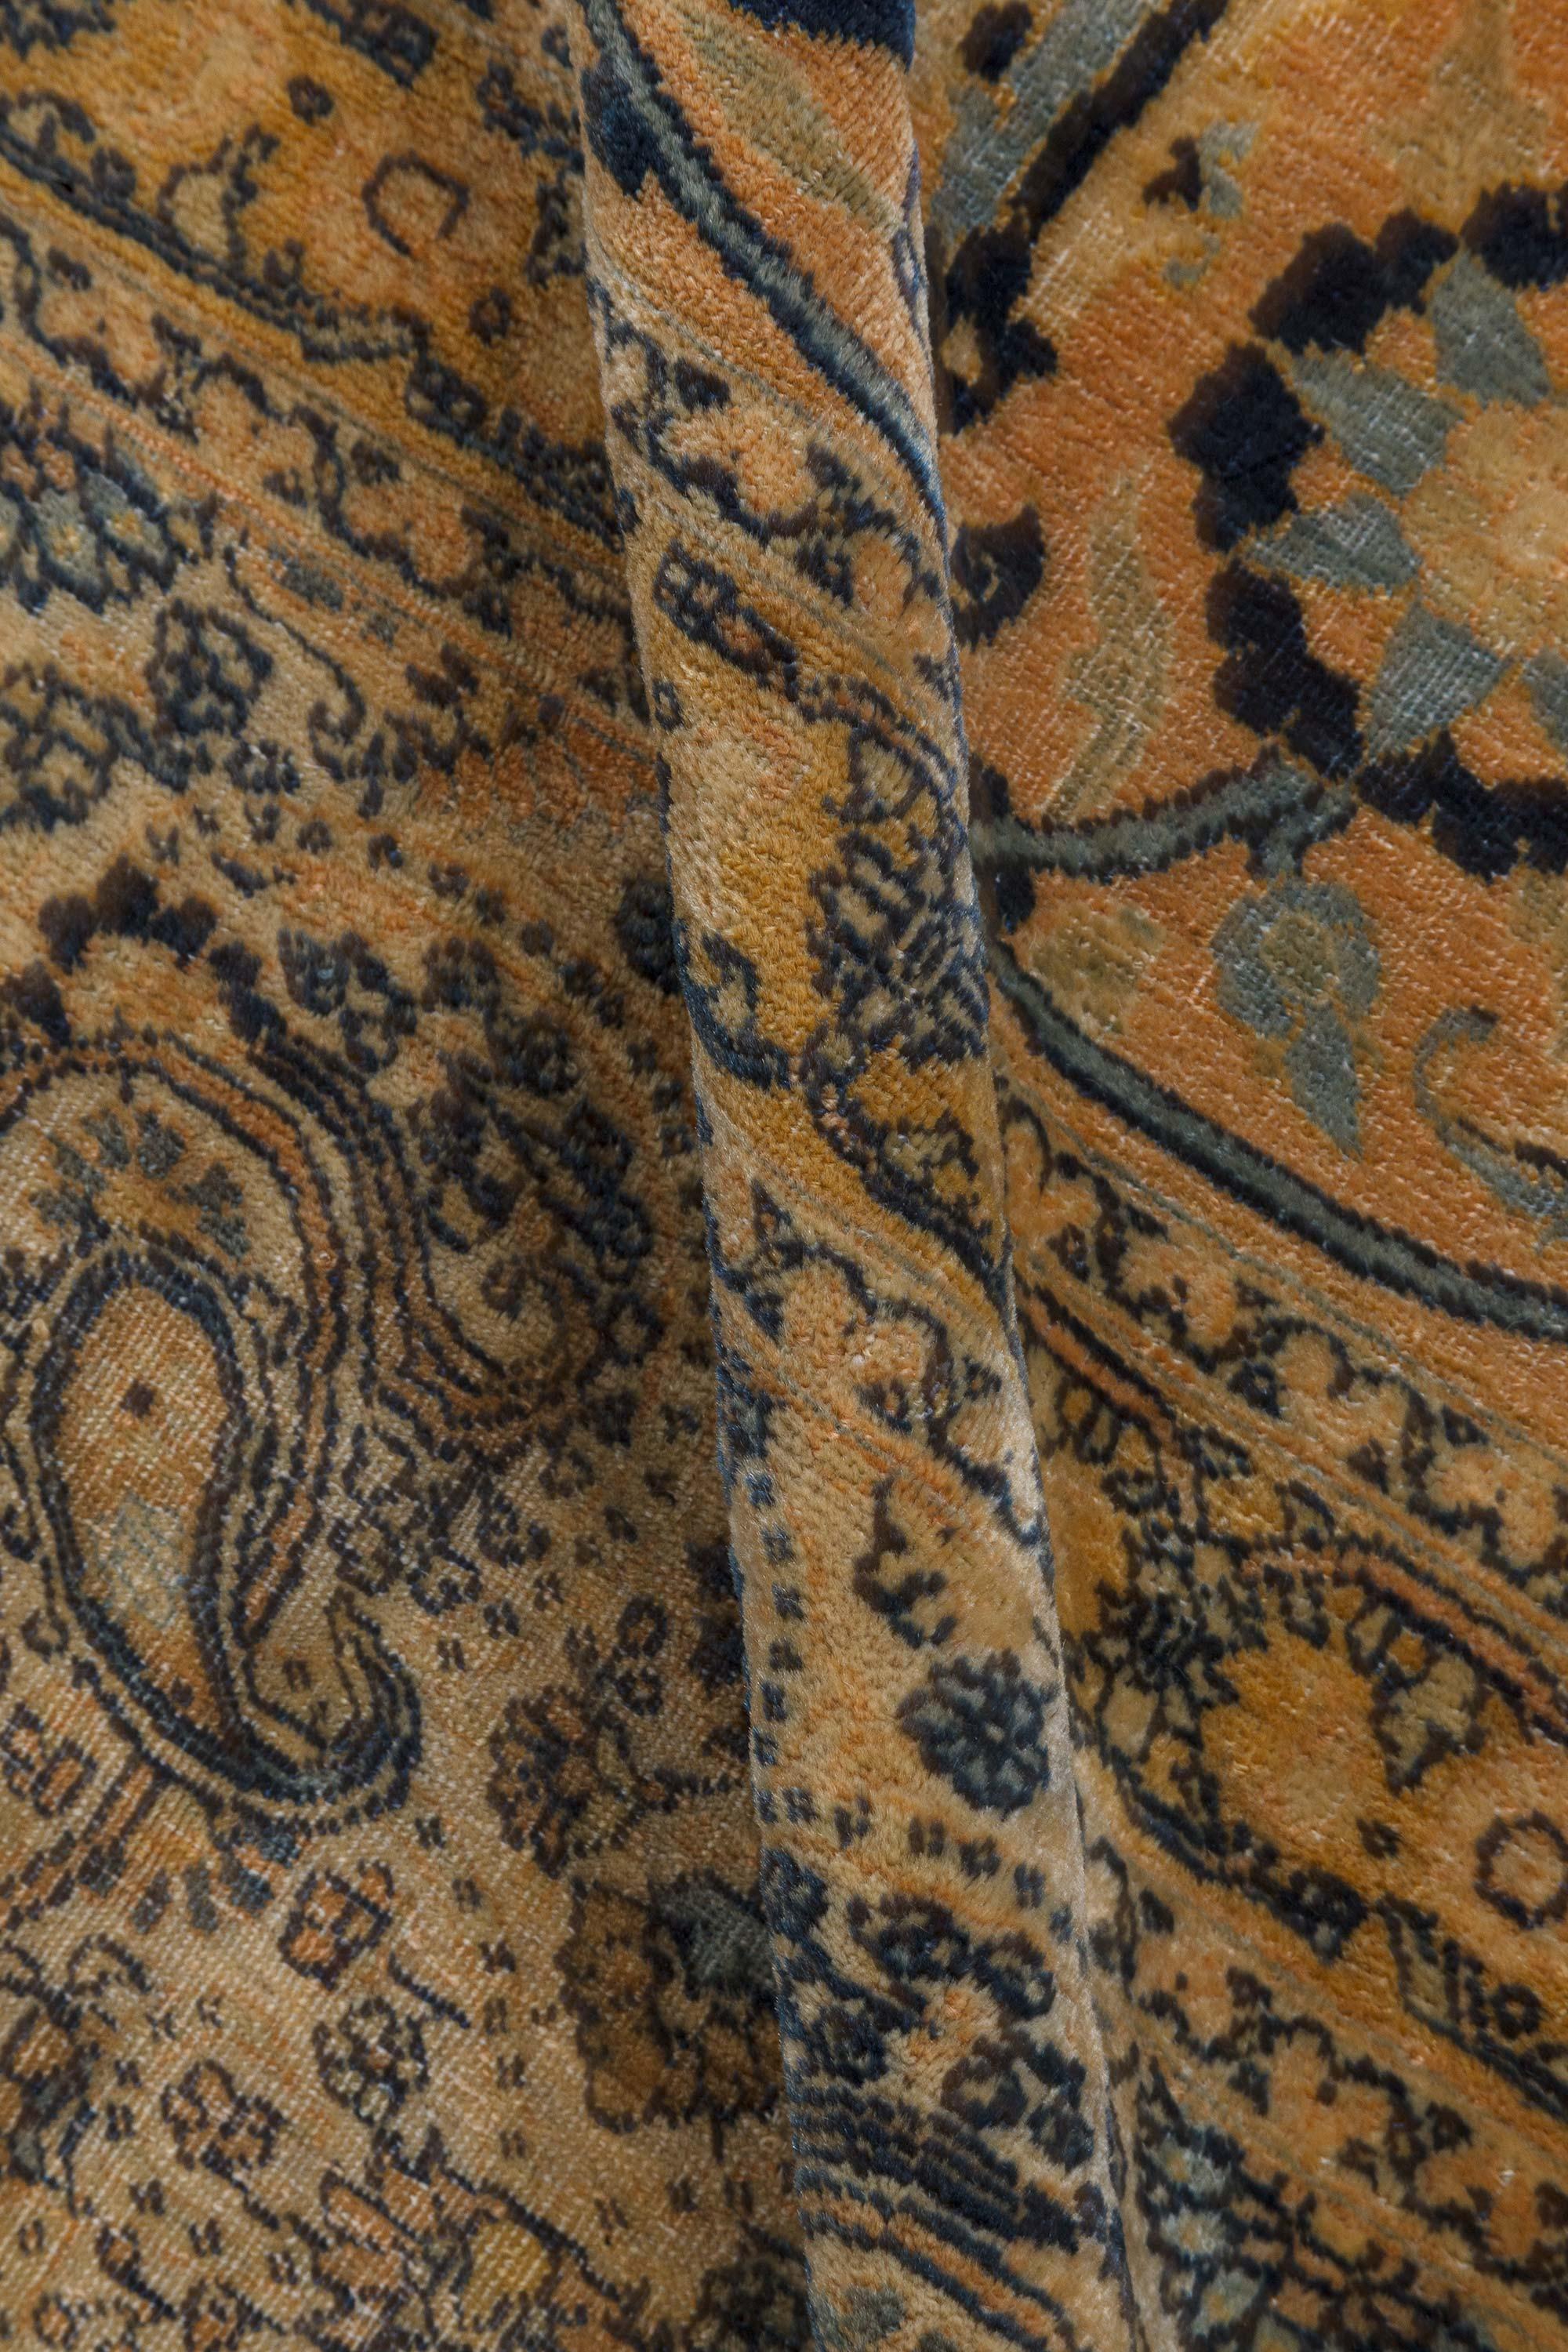 Authentic 19th century Persian Tabriz handmade wool rug
Size: 12'3